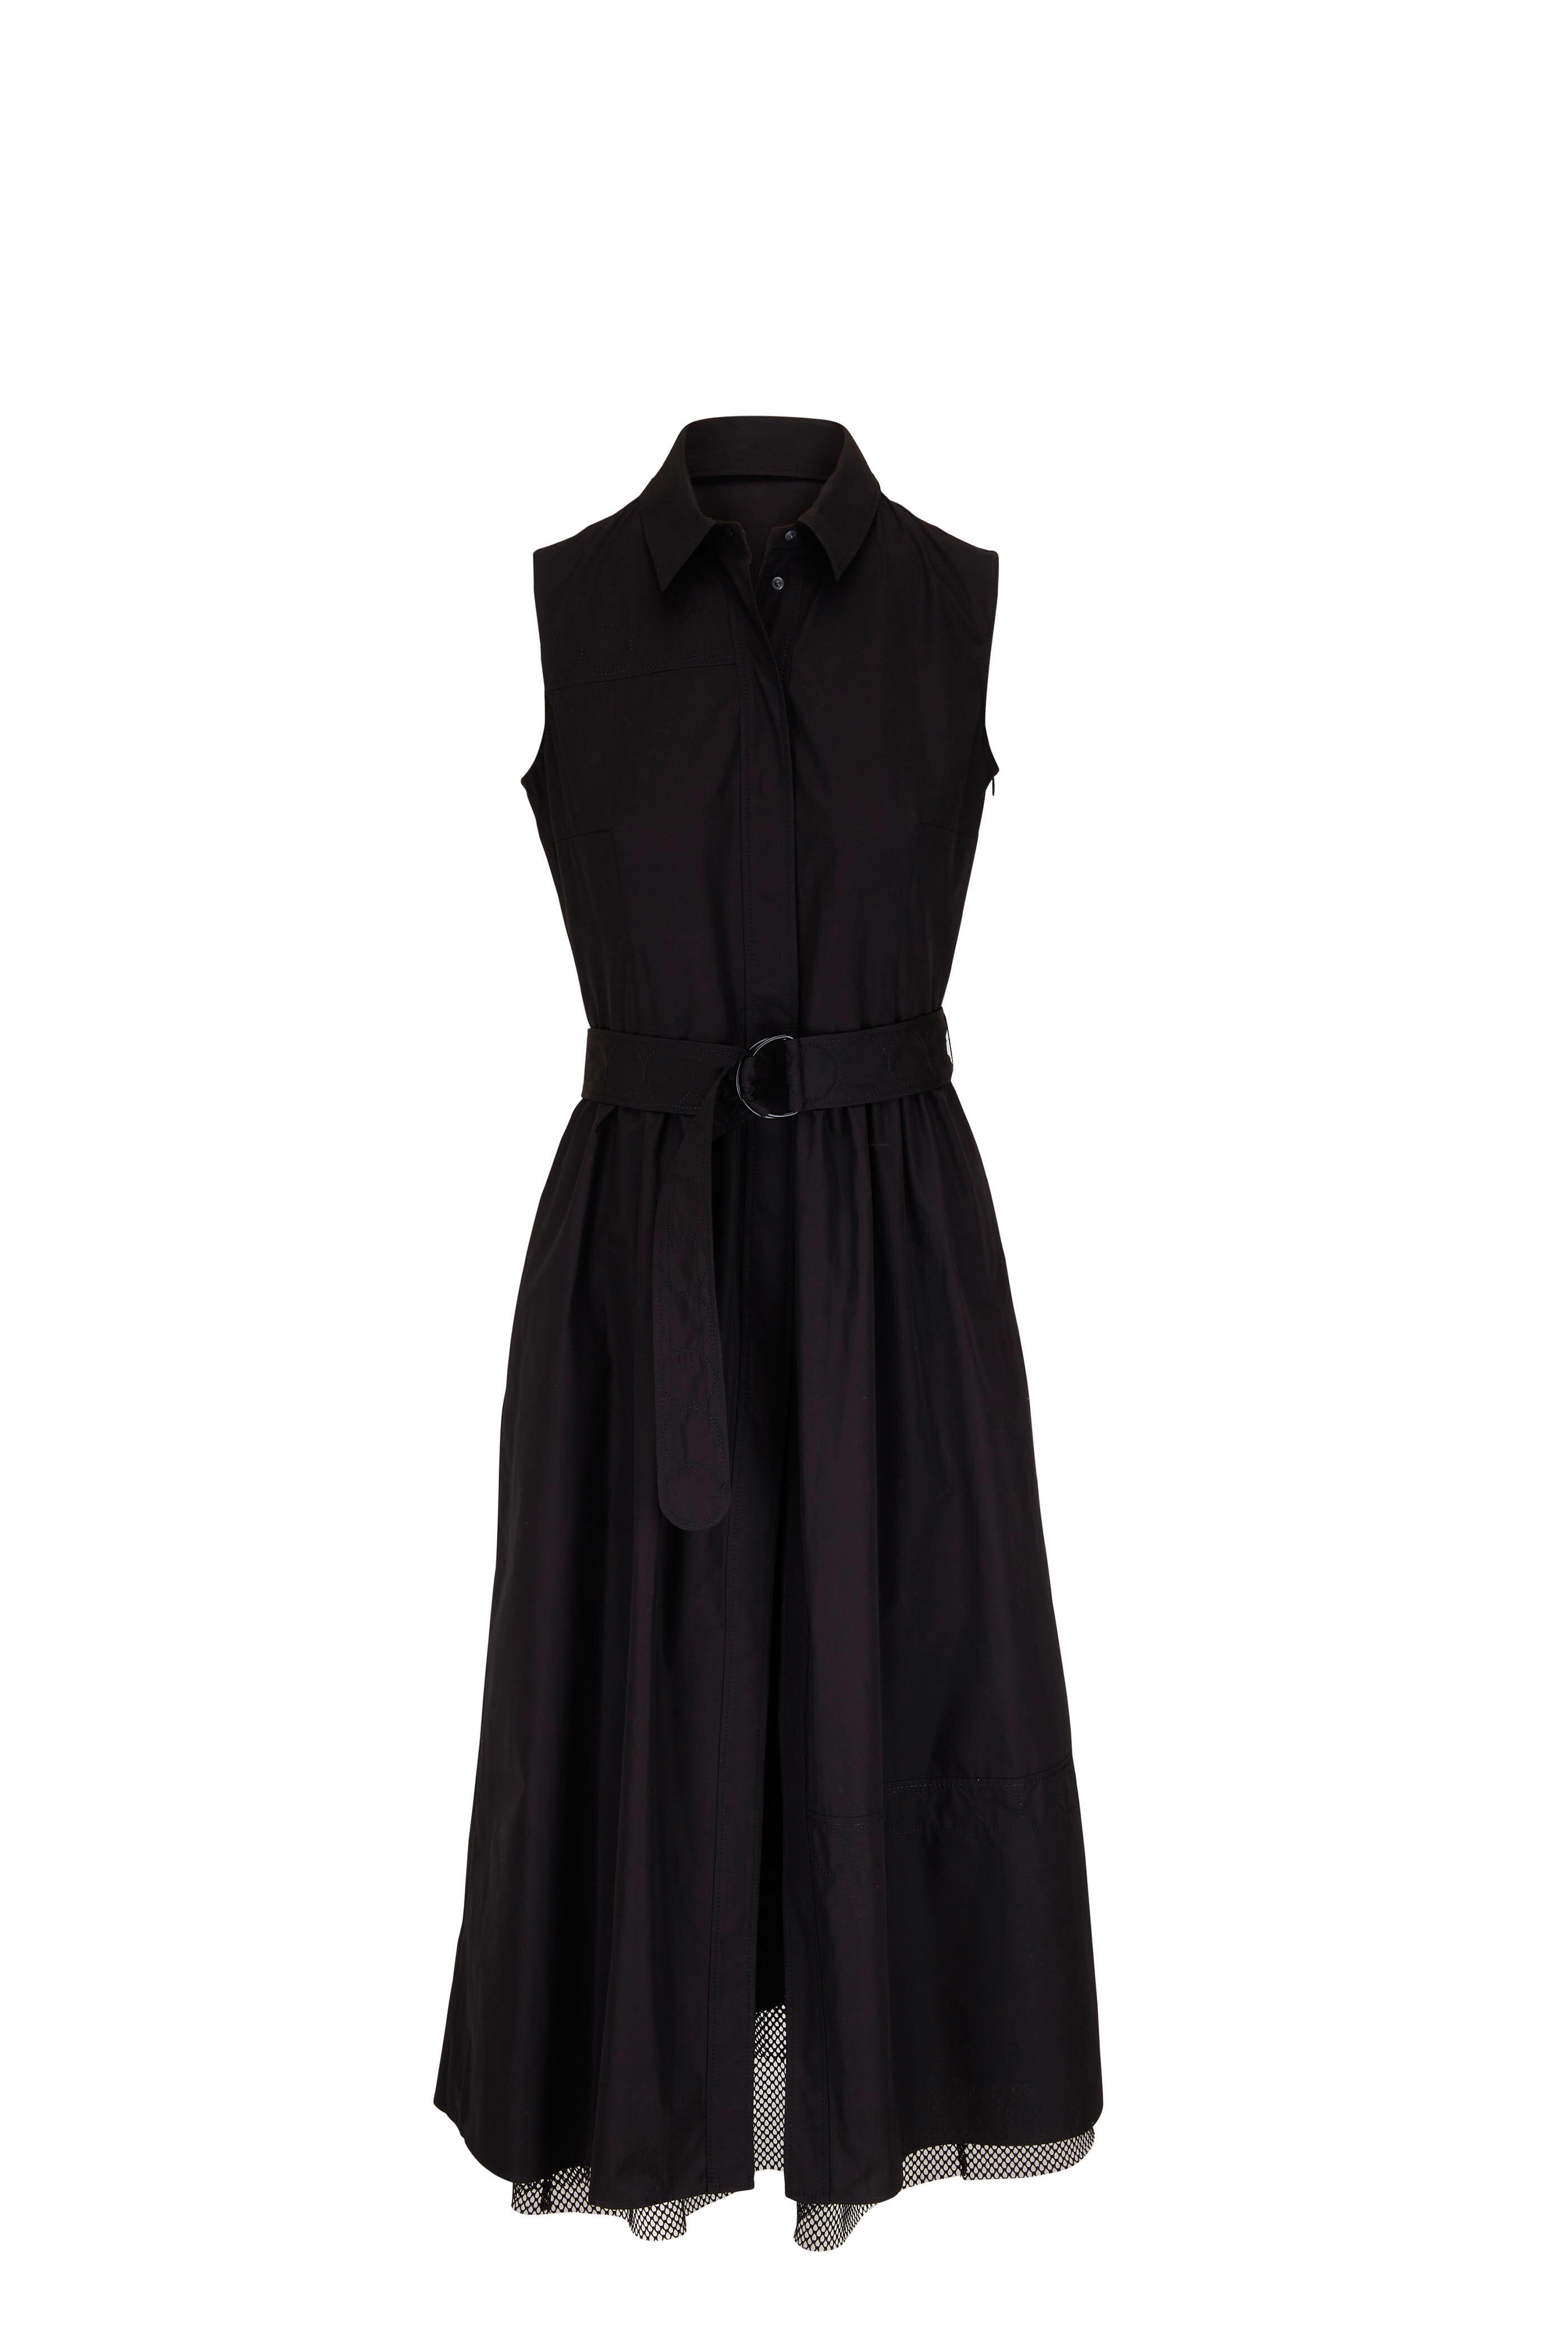 Akris Punto - Poplin Layered Black Cotton Belted Midi Dress